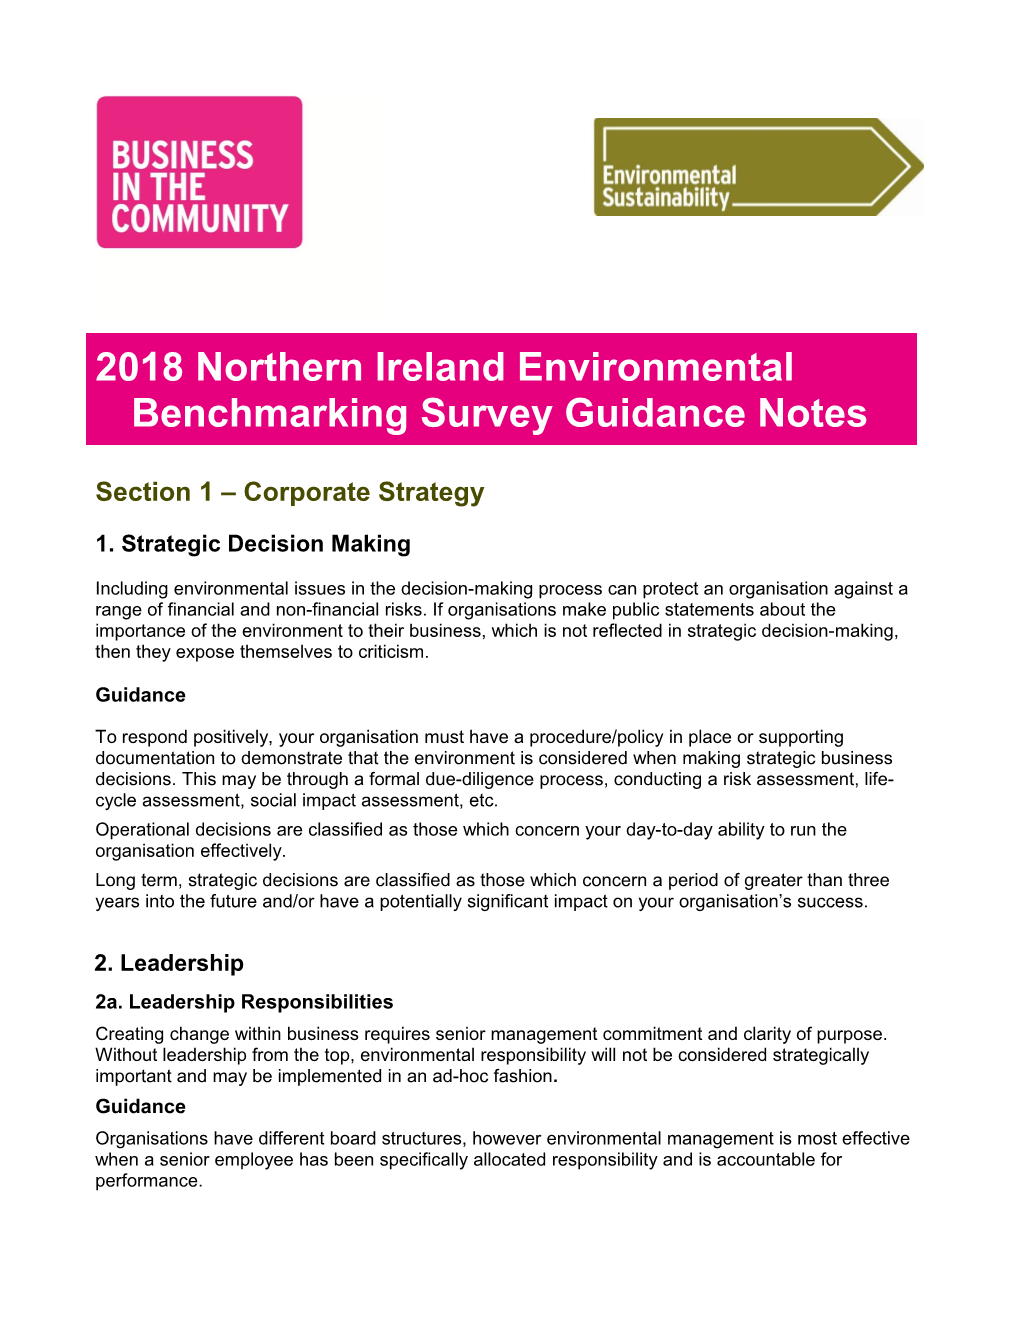 2018 Northern Ireland Environmental Benchmarking Survey Guidance Notes